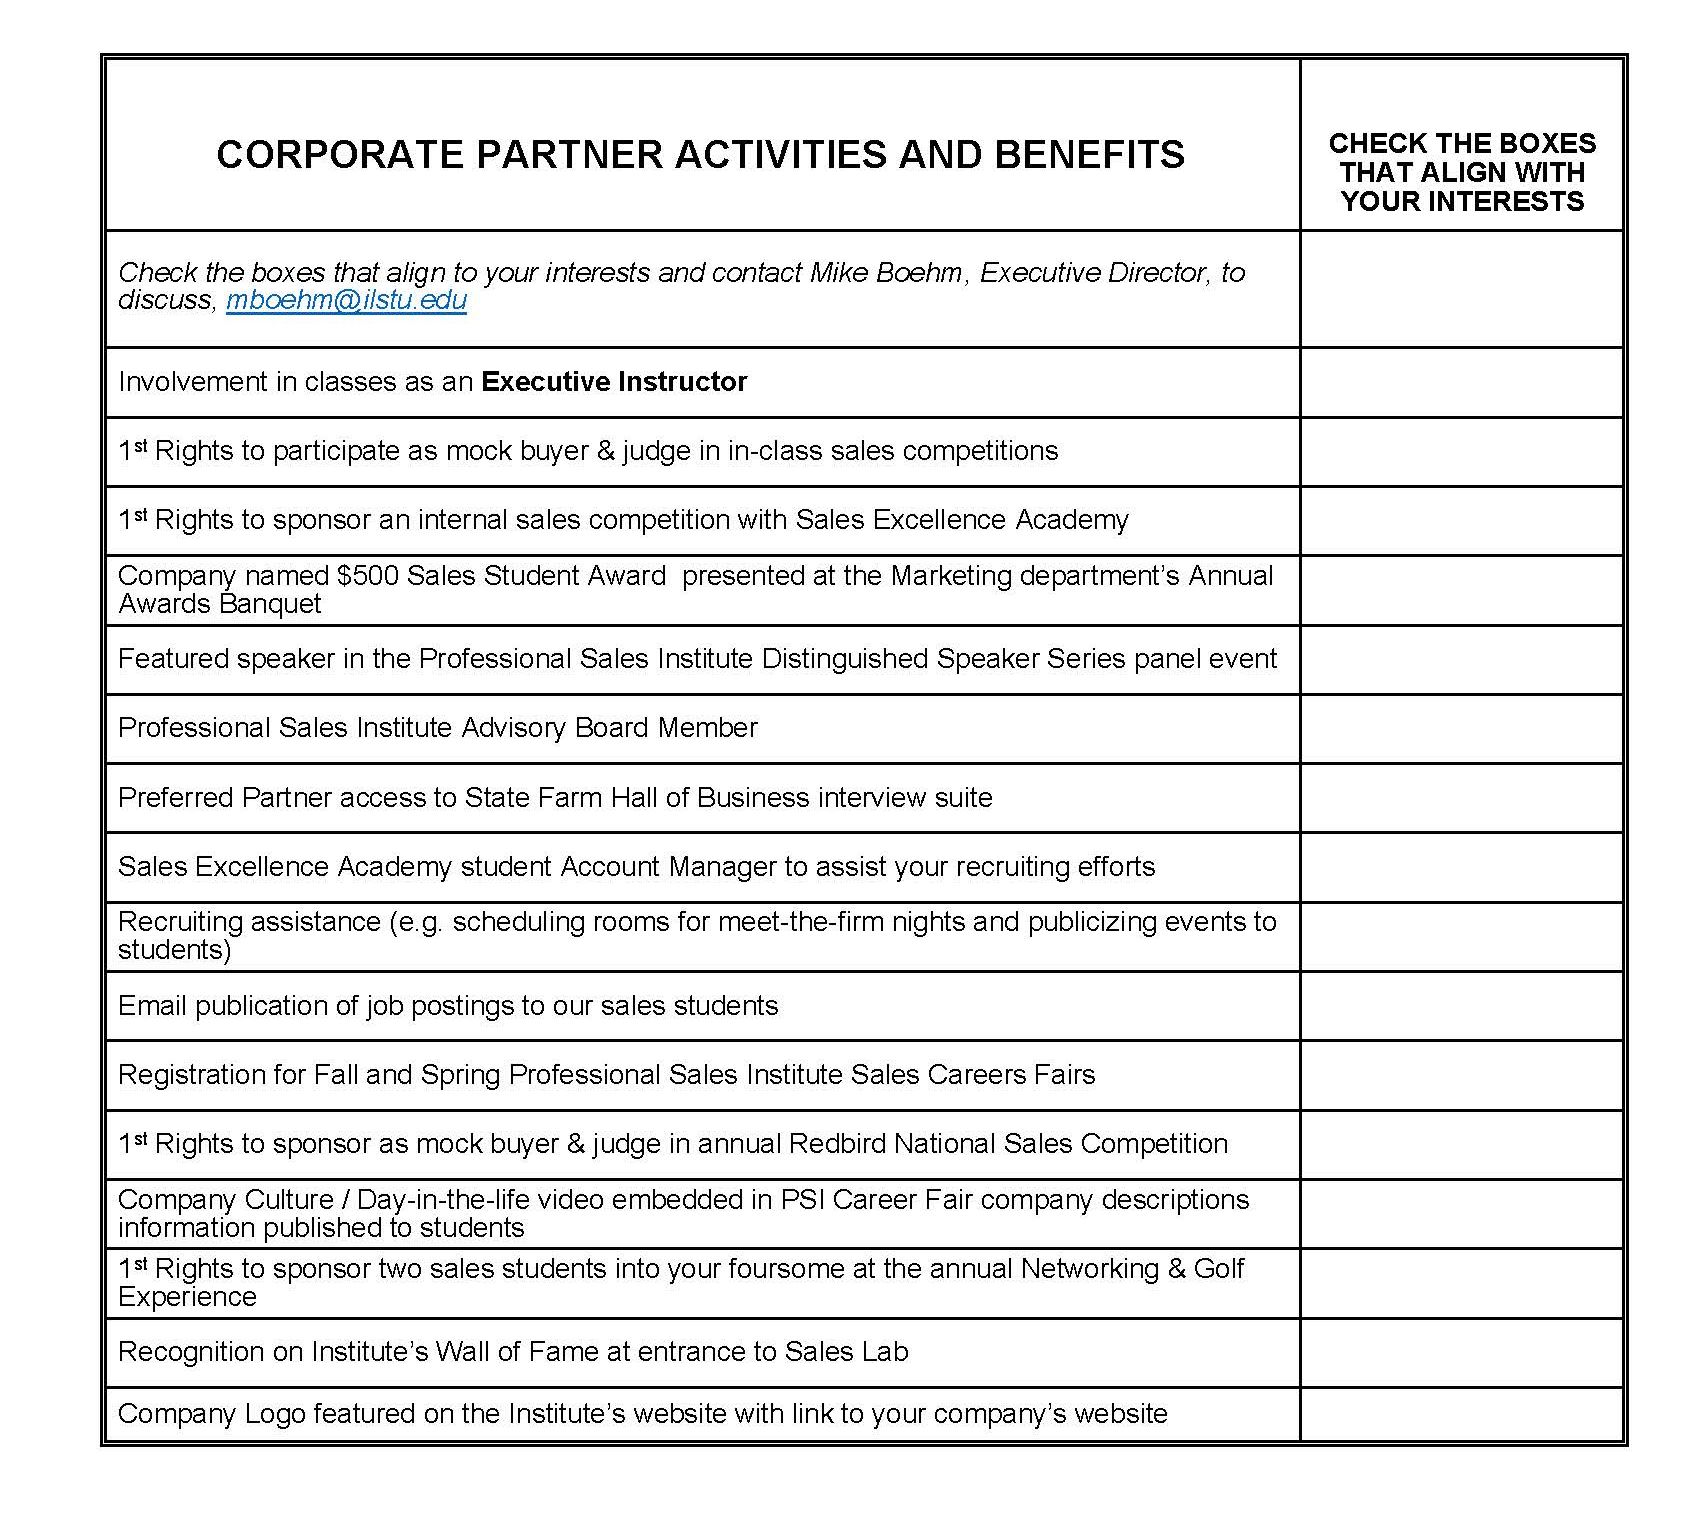 Corporate Partnership Opportunities